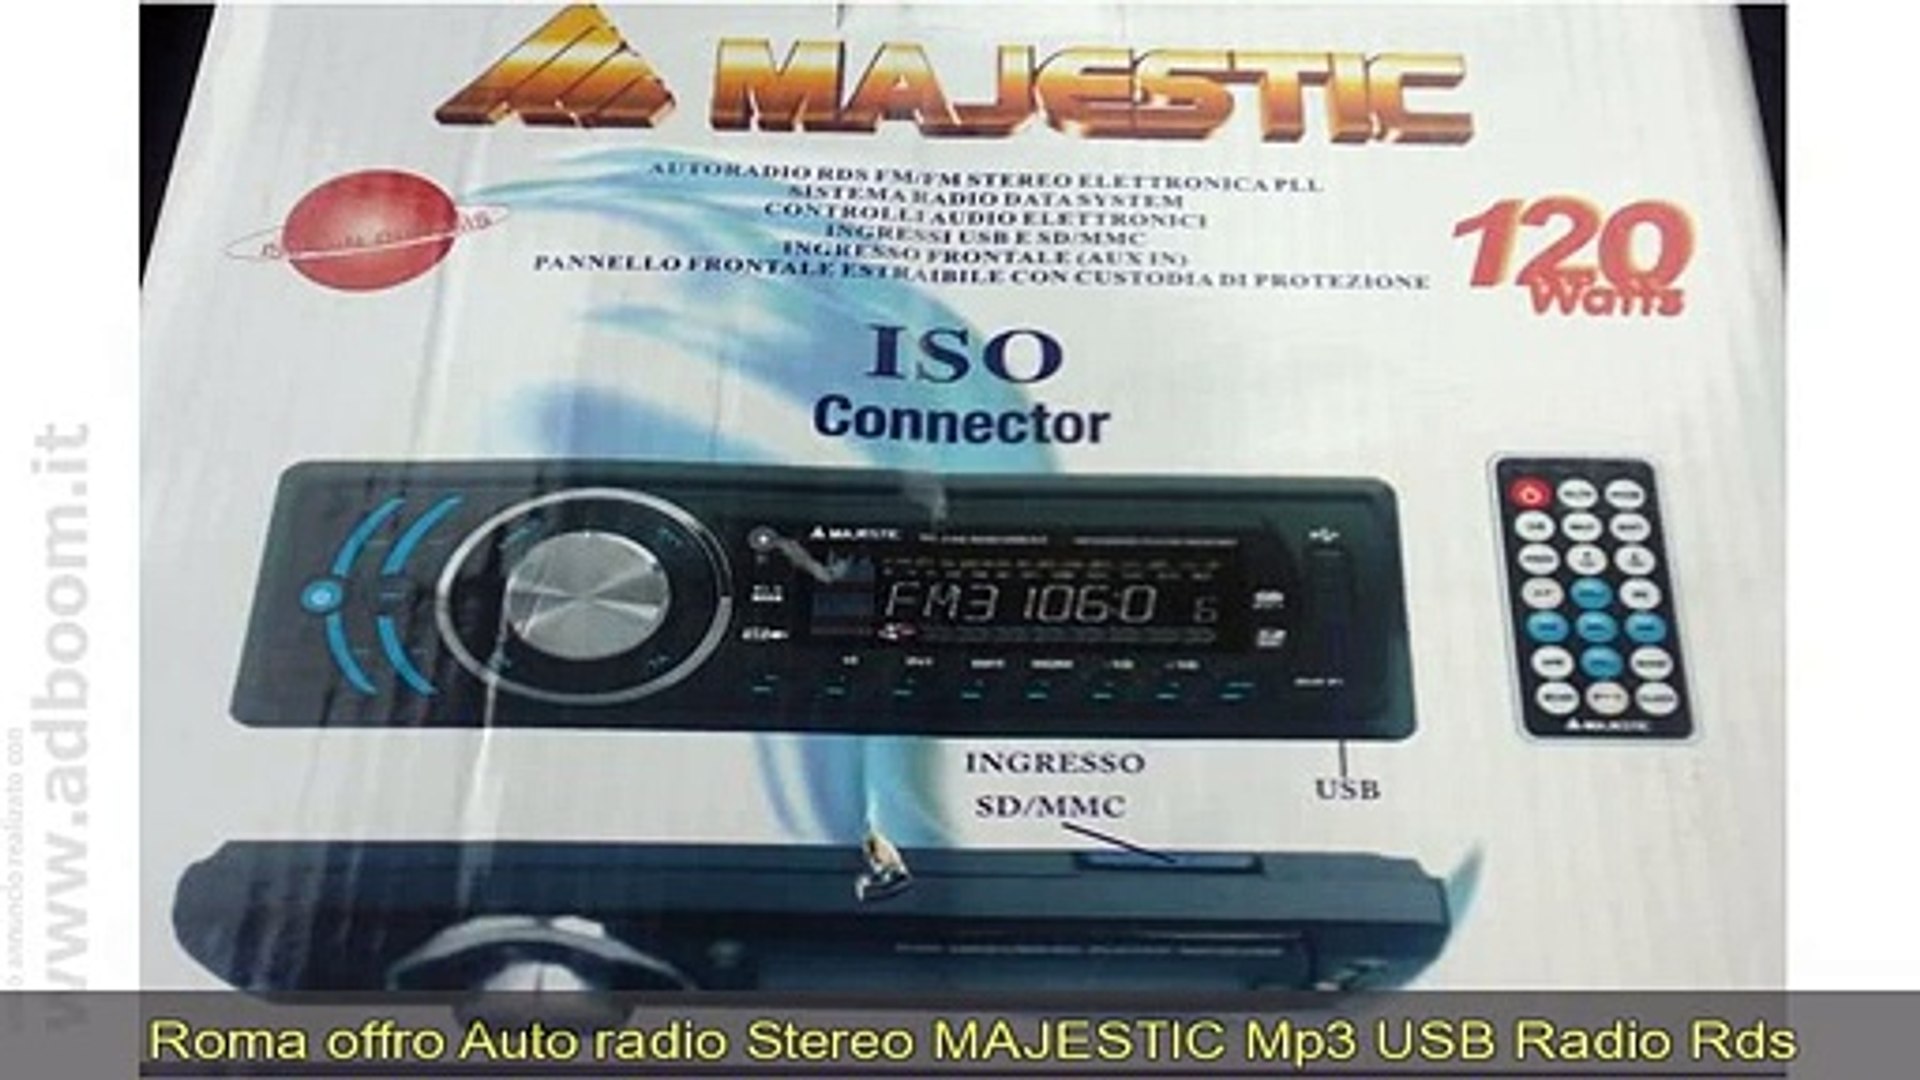 ROMA, AUTO RADIO STEREO MAJESTIC MP3 USB RADIO RDS SCHEDA MMC EURO 39 -  Video Dailymotion